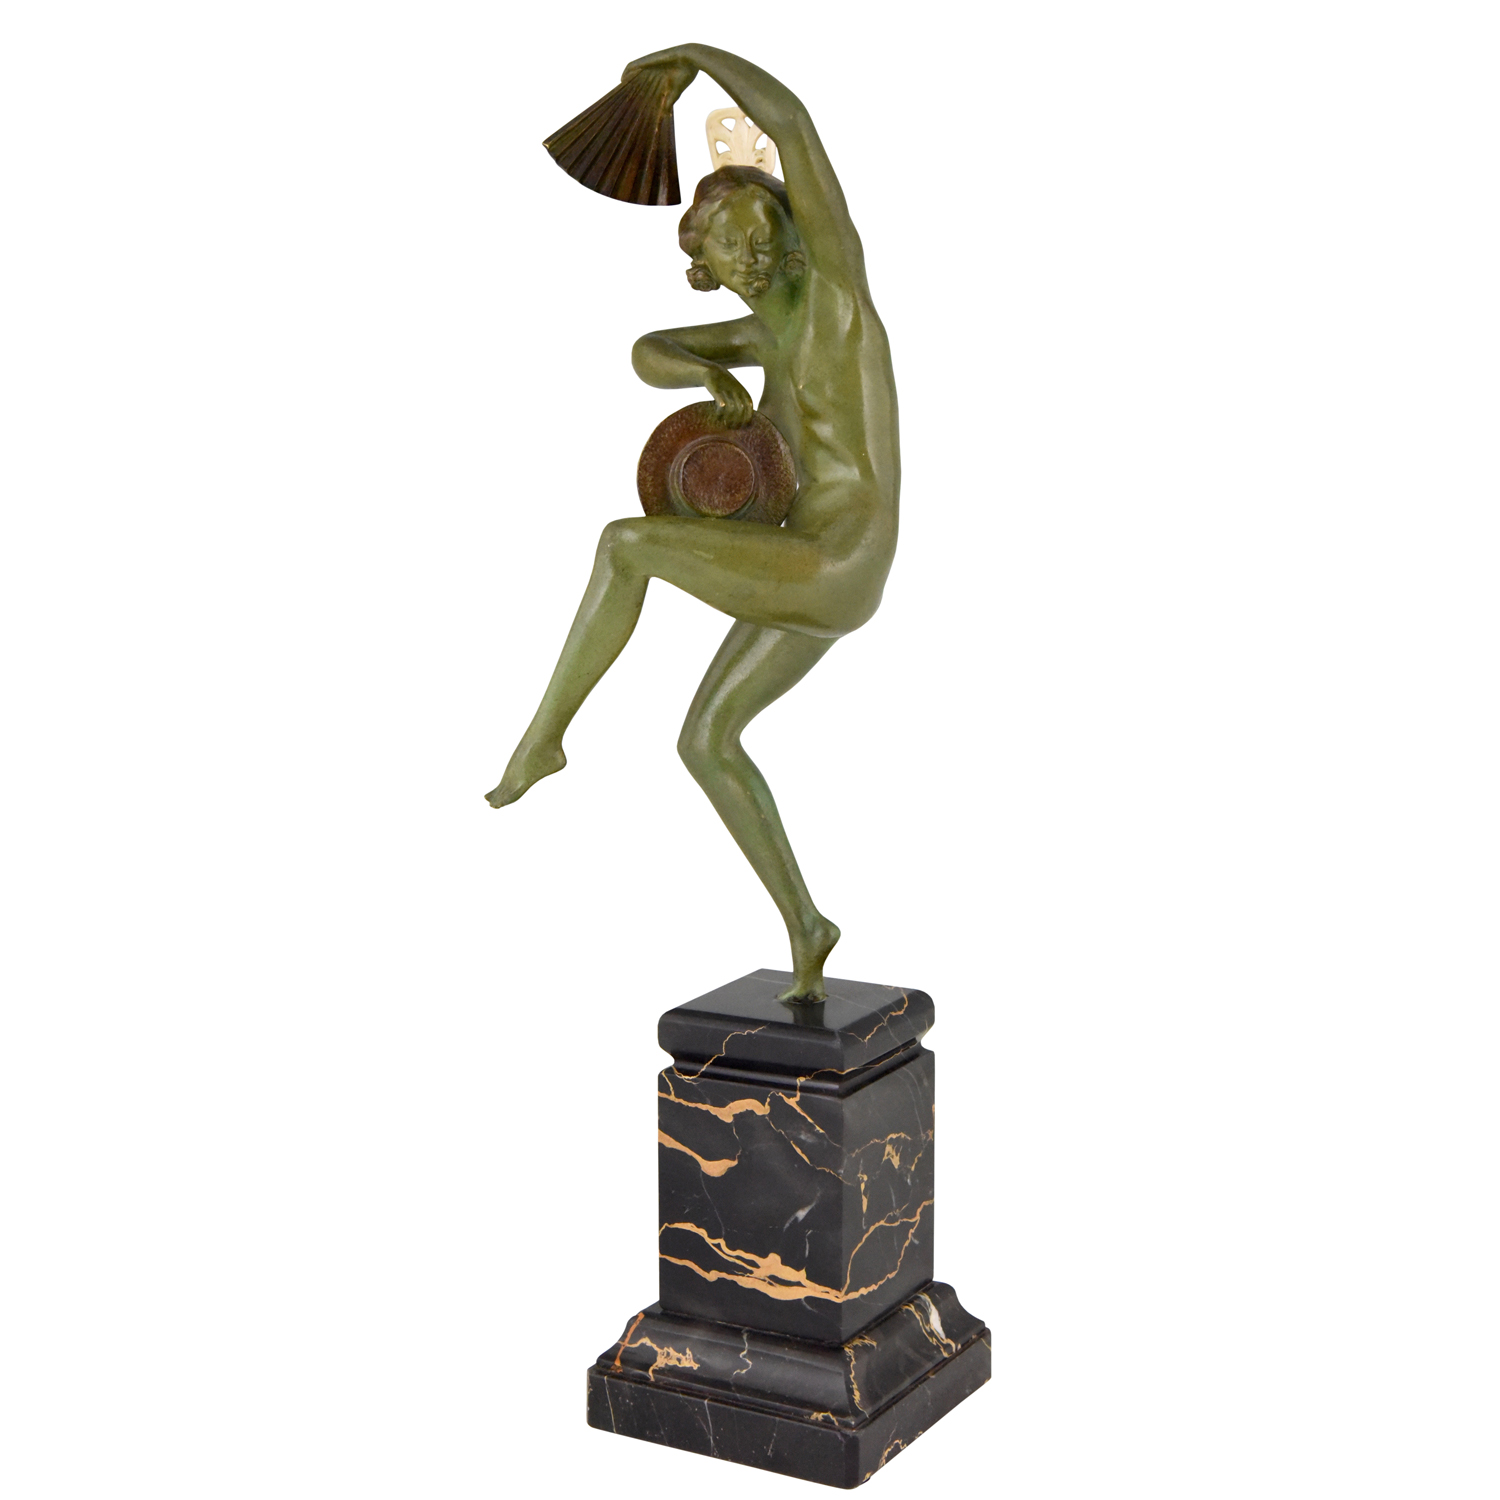 Art Deco bronze sculpture nude dancer with fan and hat